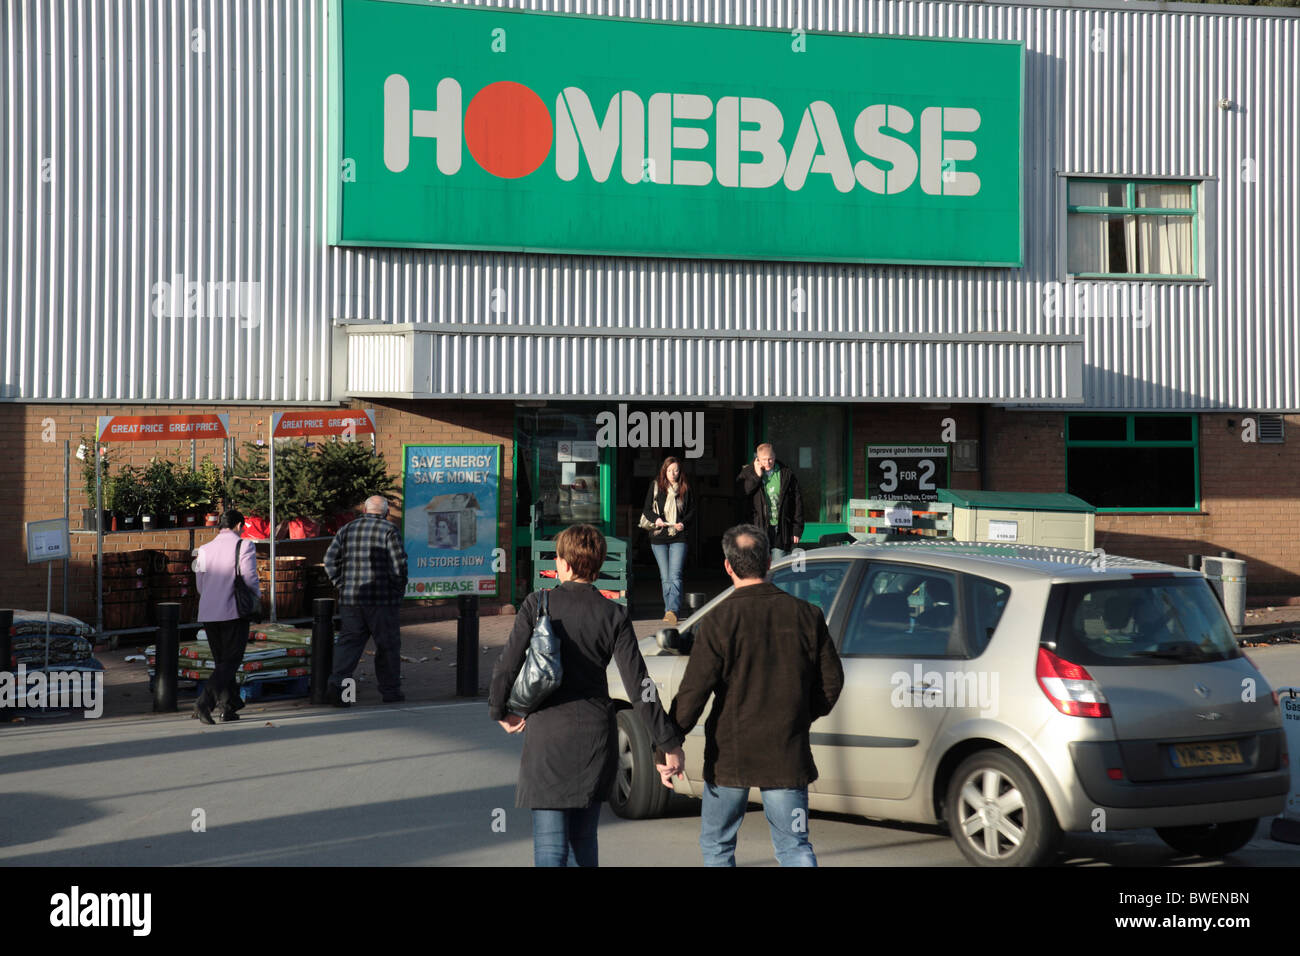 Homebase, Doncaster Stock Photo